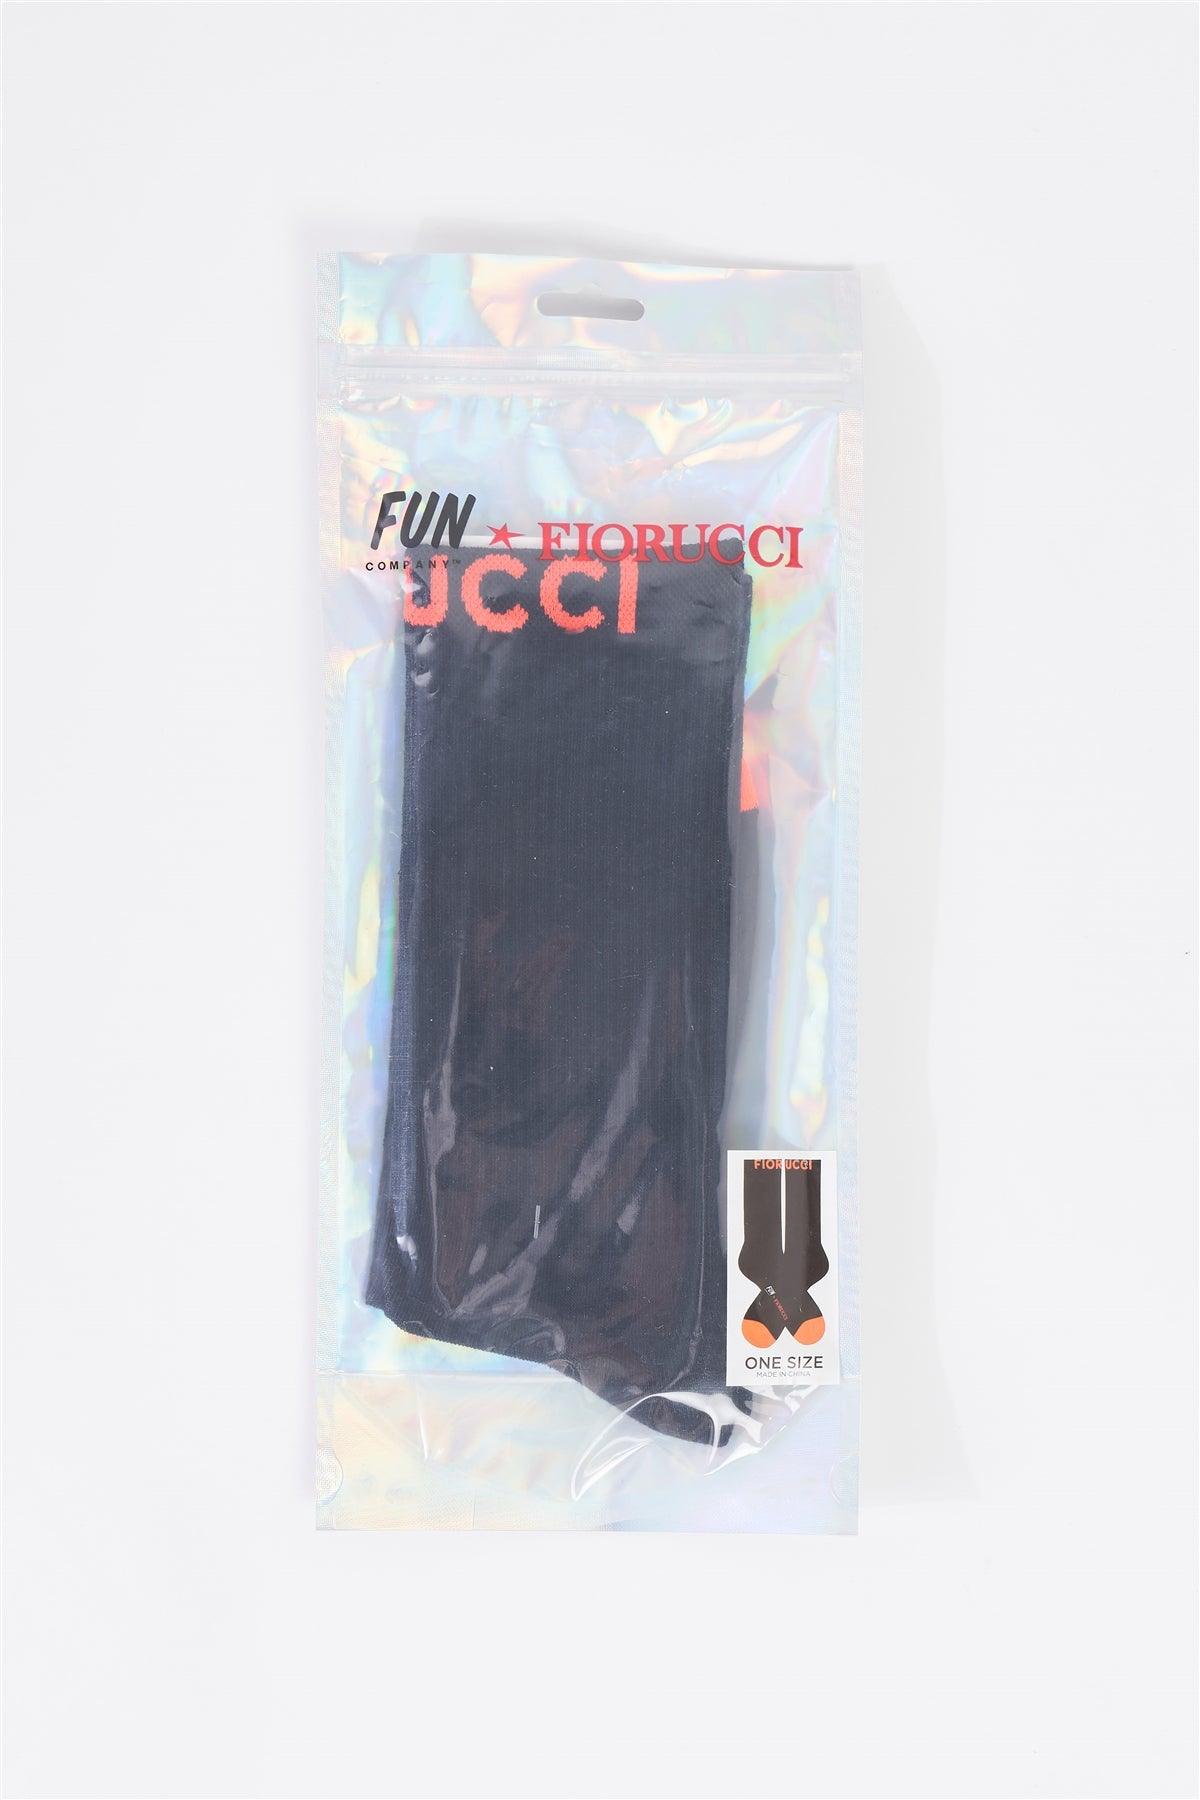 Fiorucci Fun Black & Orange Mid Calf Ribbed Printed Logo Detail Socks /3 Pairs